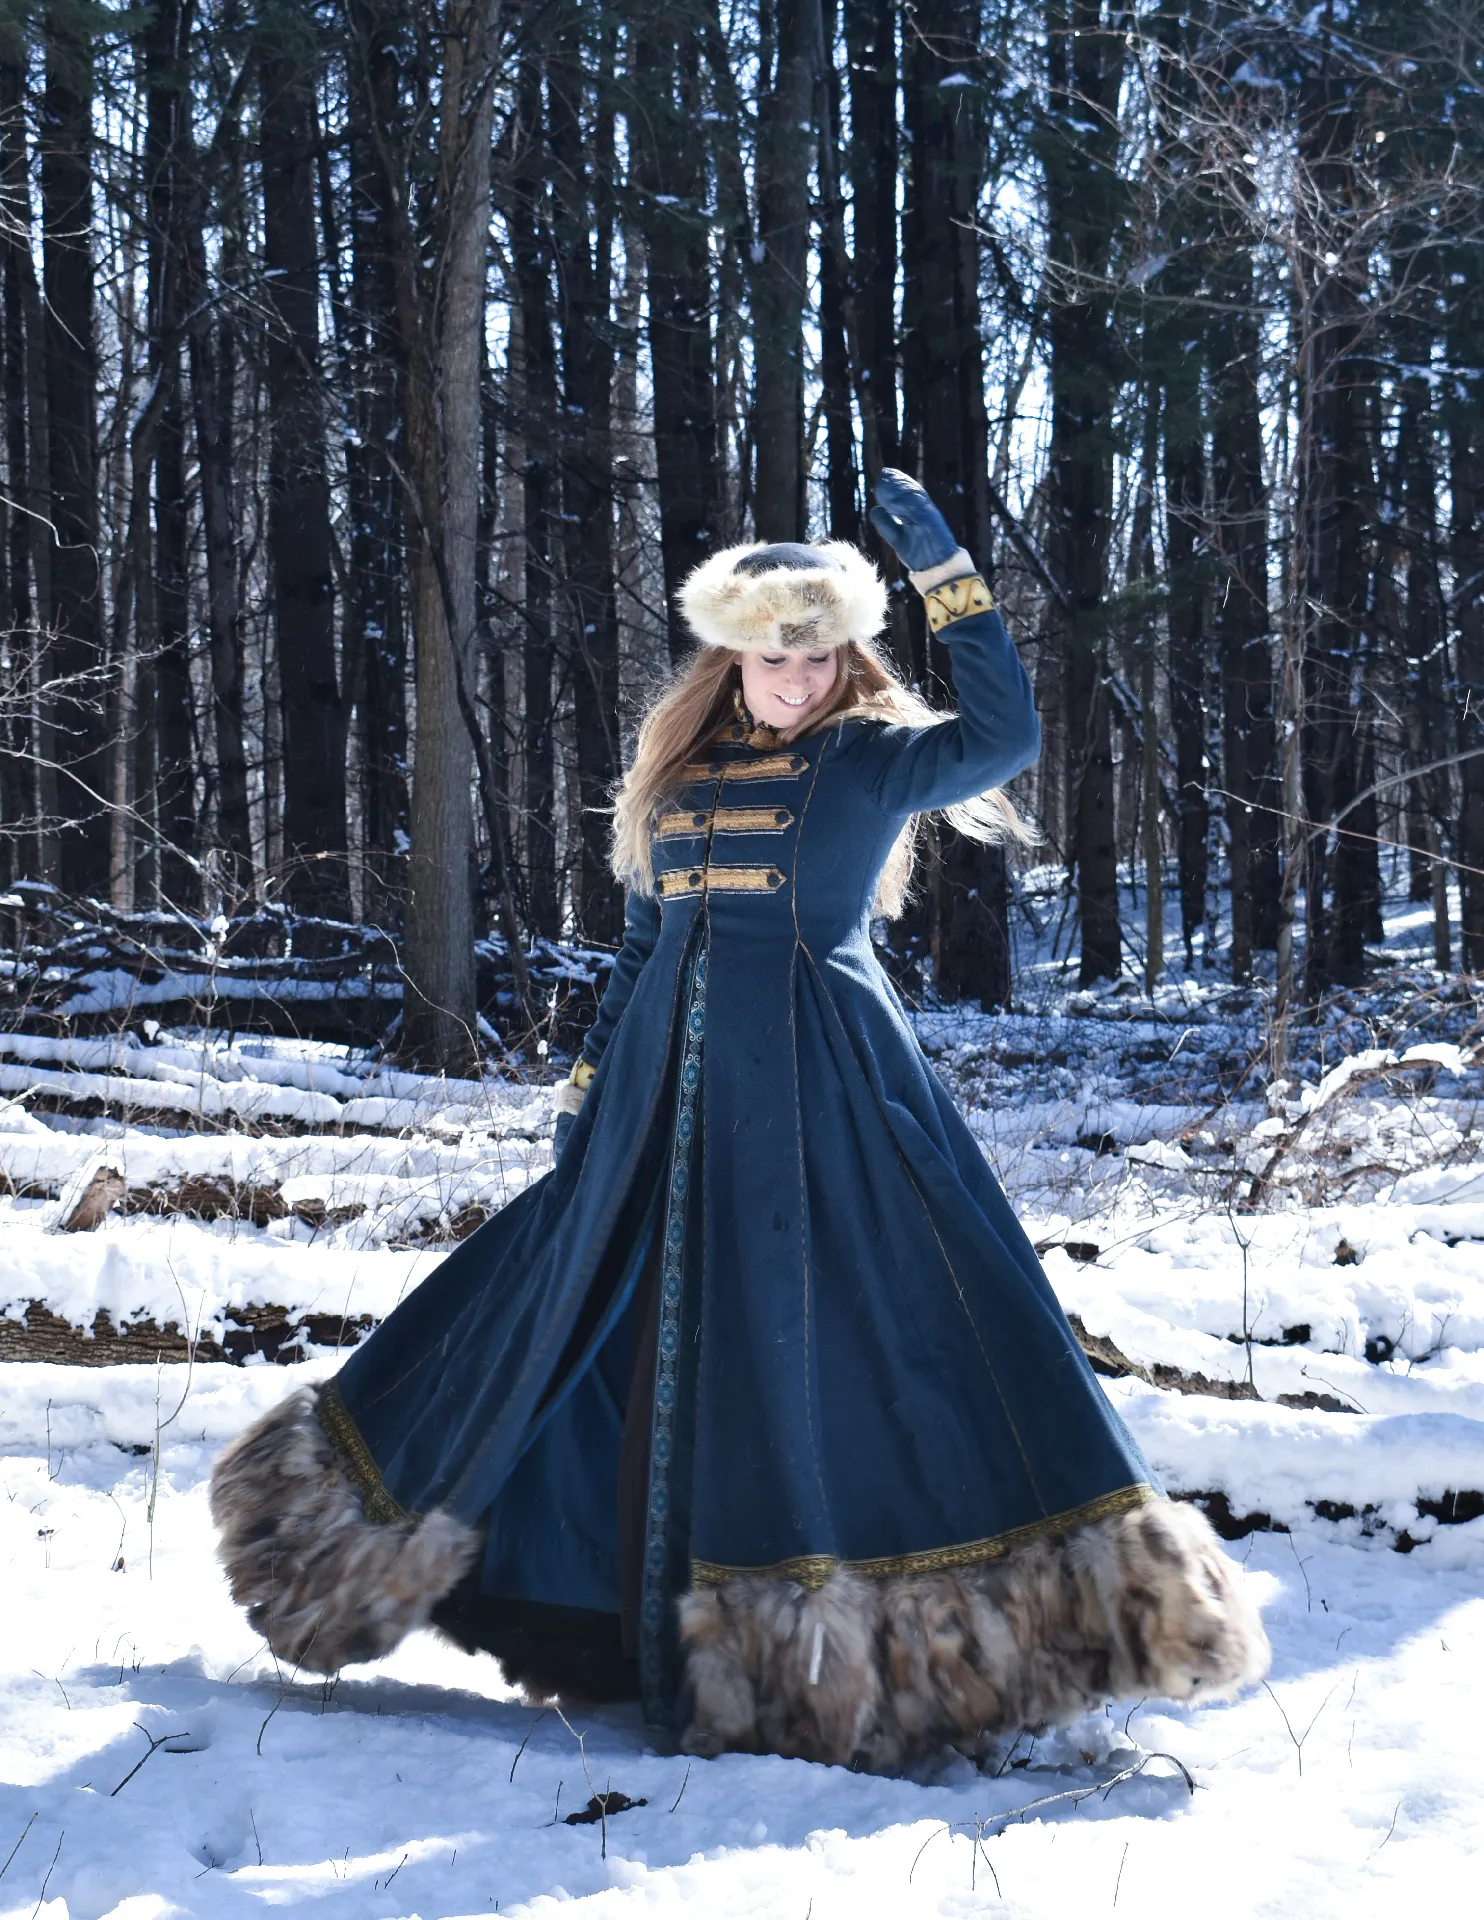 Female Celtic and Viking inspired LARP warrior #larp #cosplaygirl #cosplay # vikings #costume